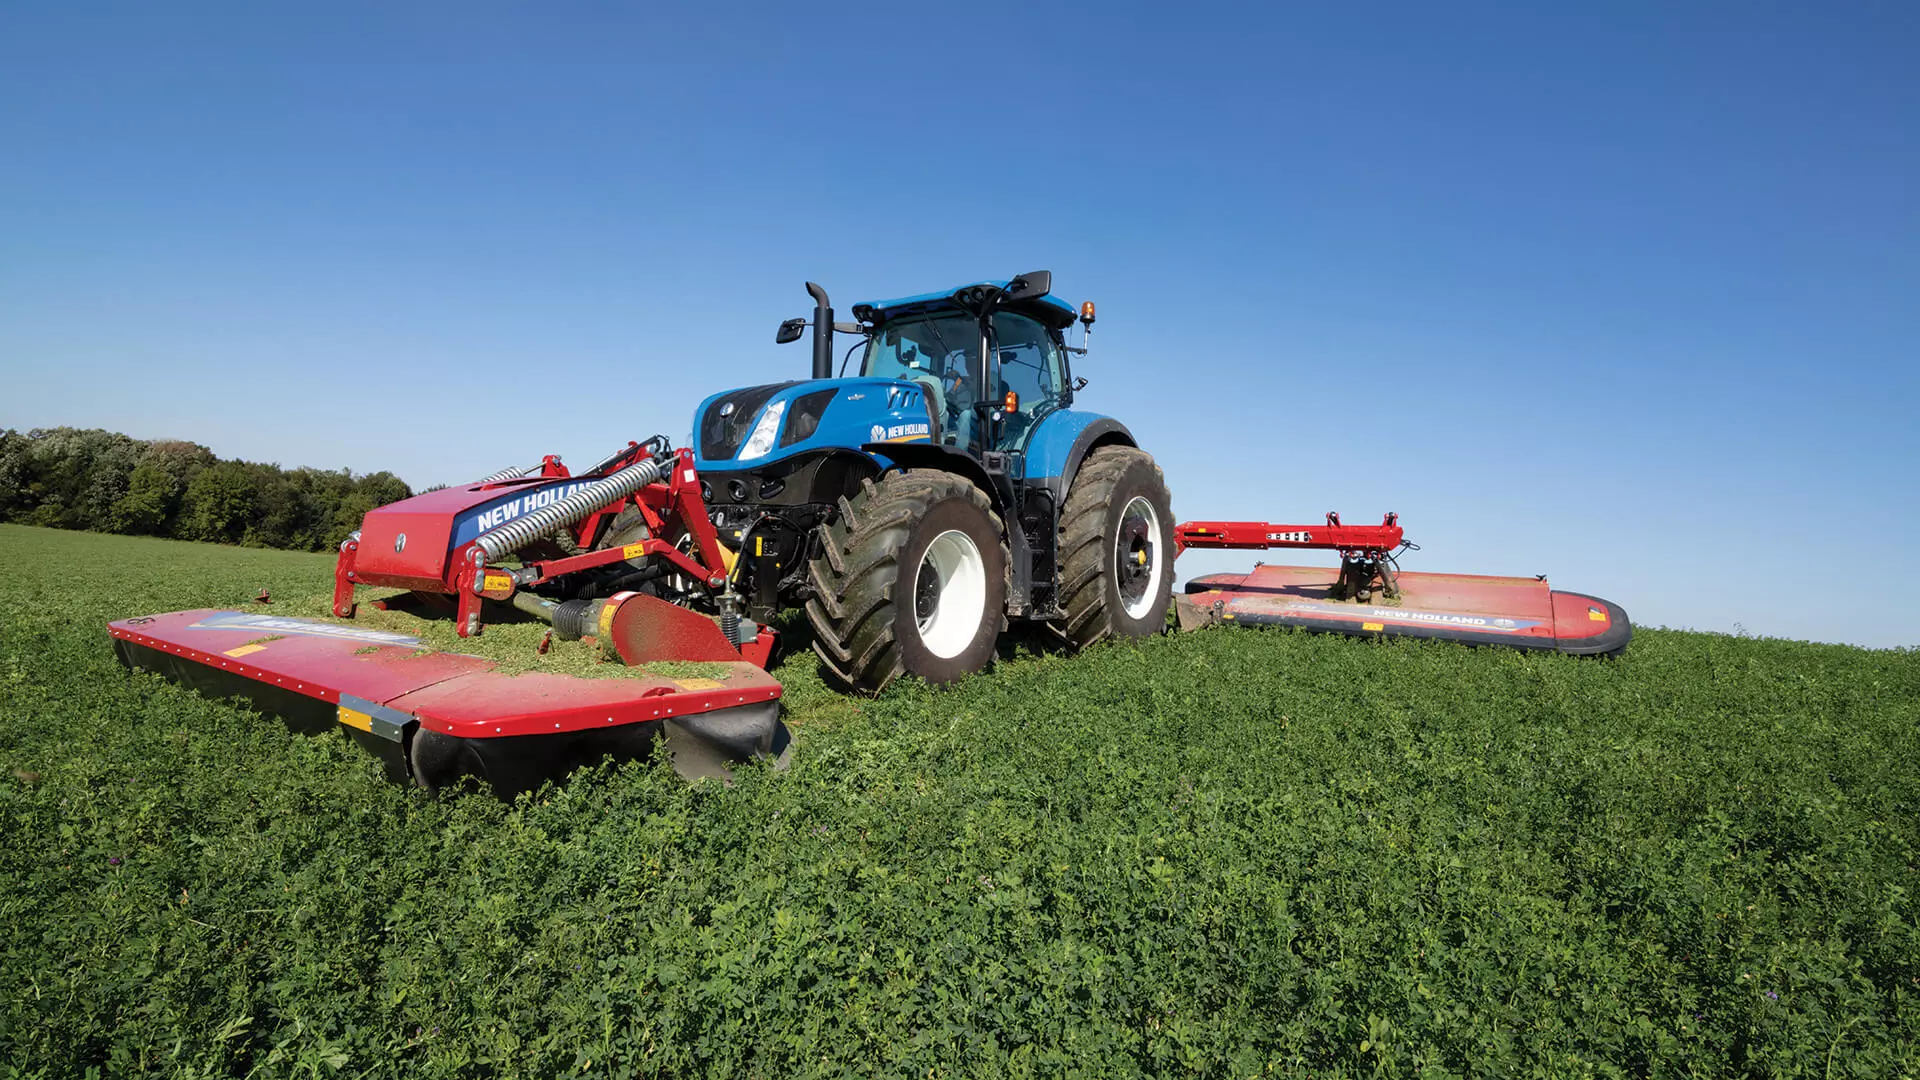 HD Hay Frame Attachment Fits John Deere Tractors - Optional Hay